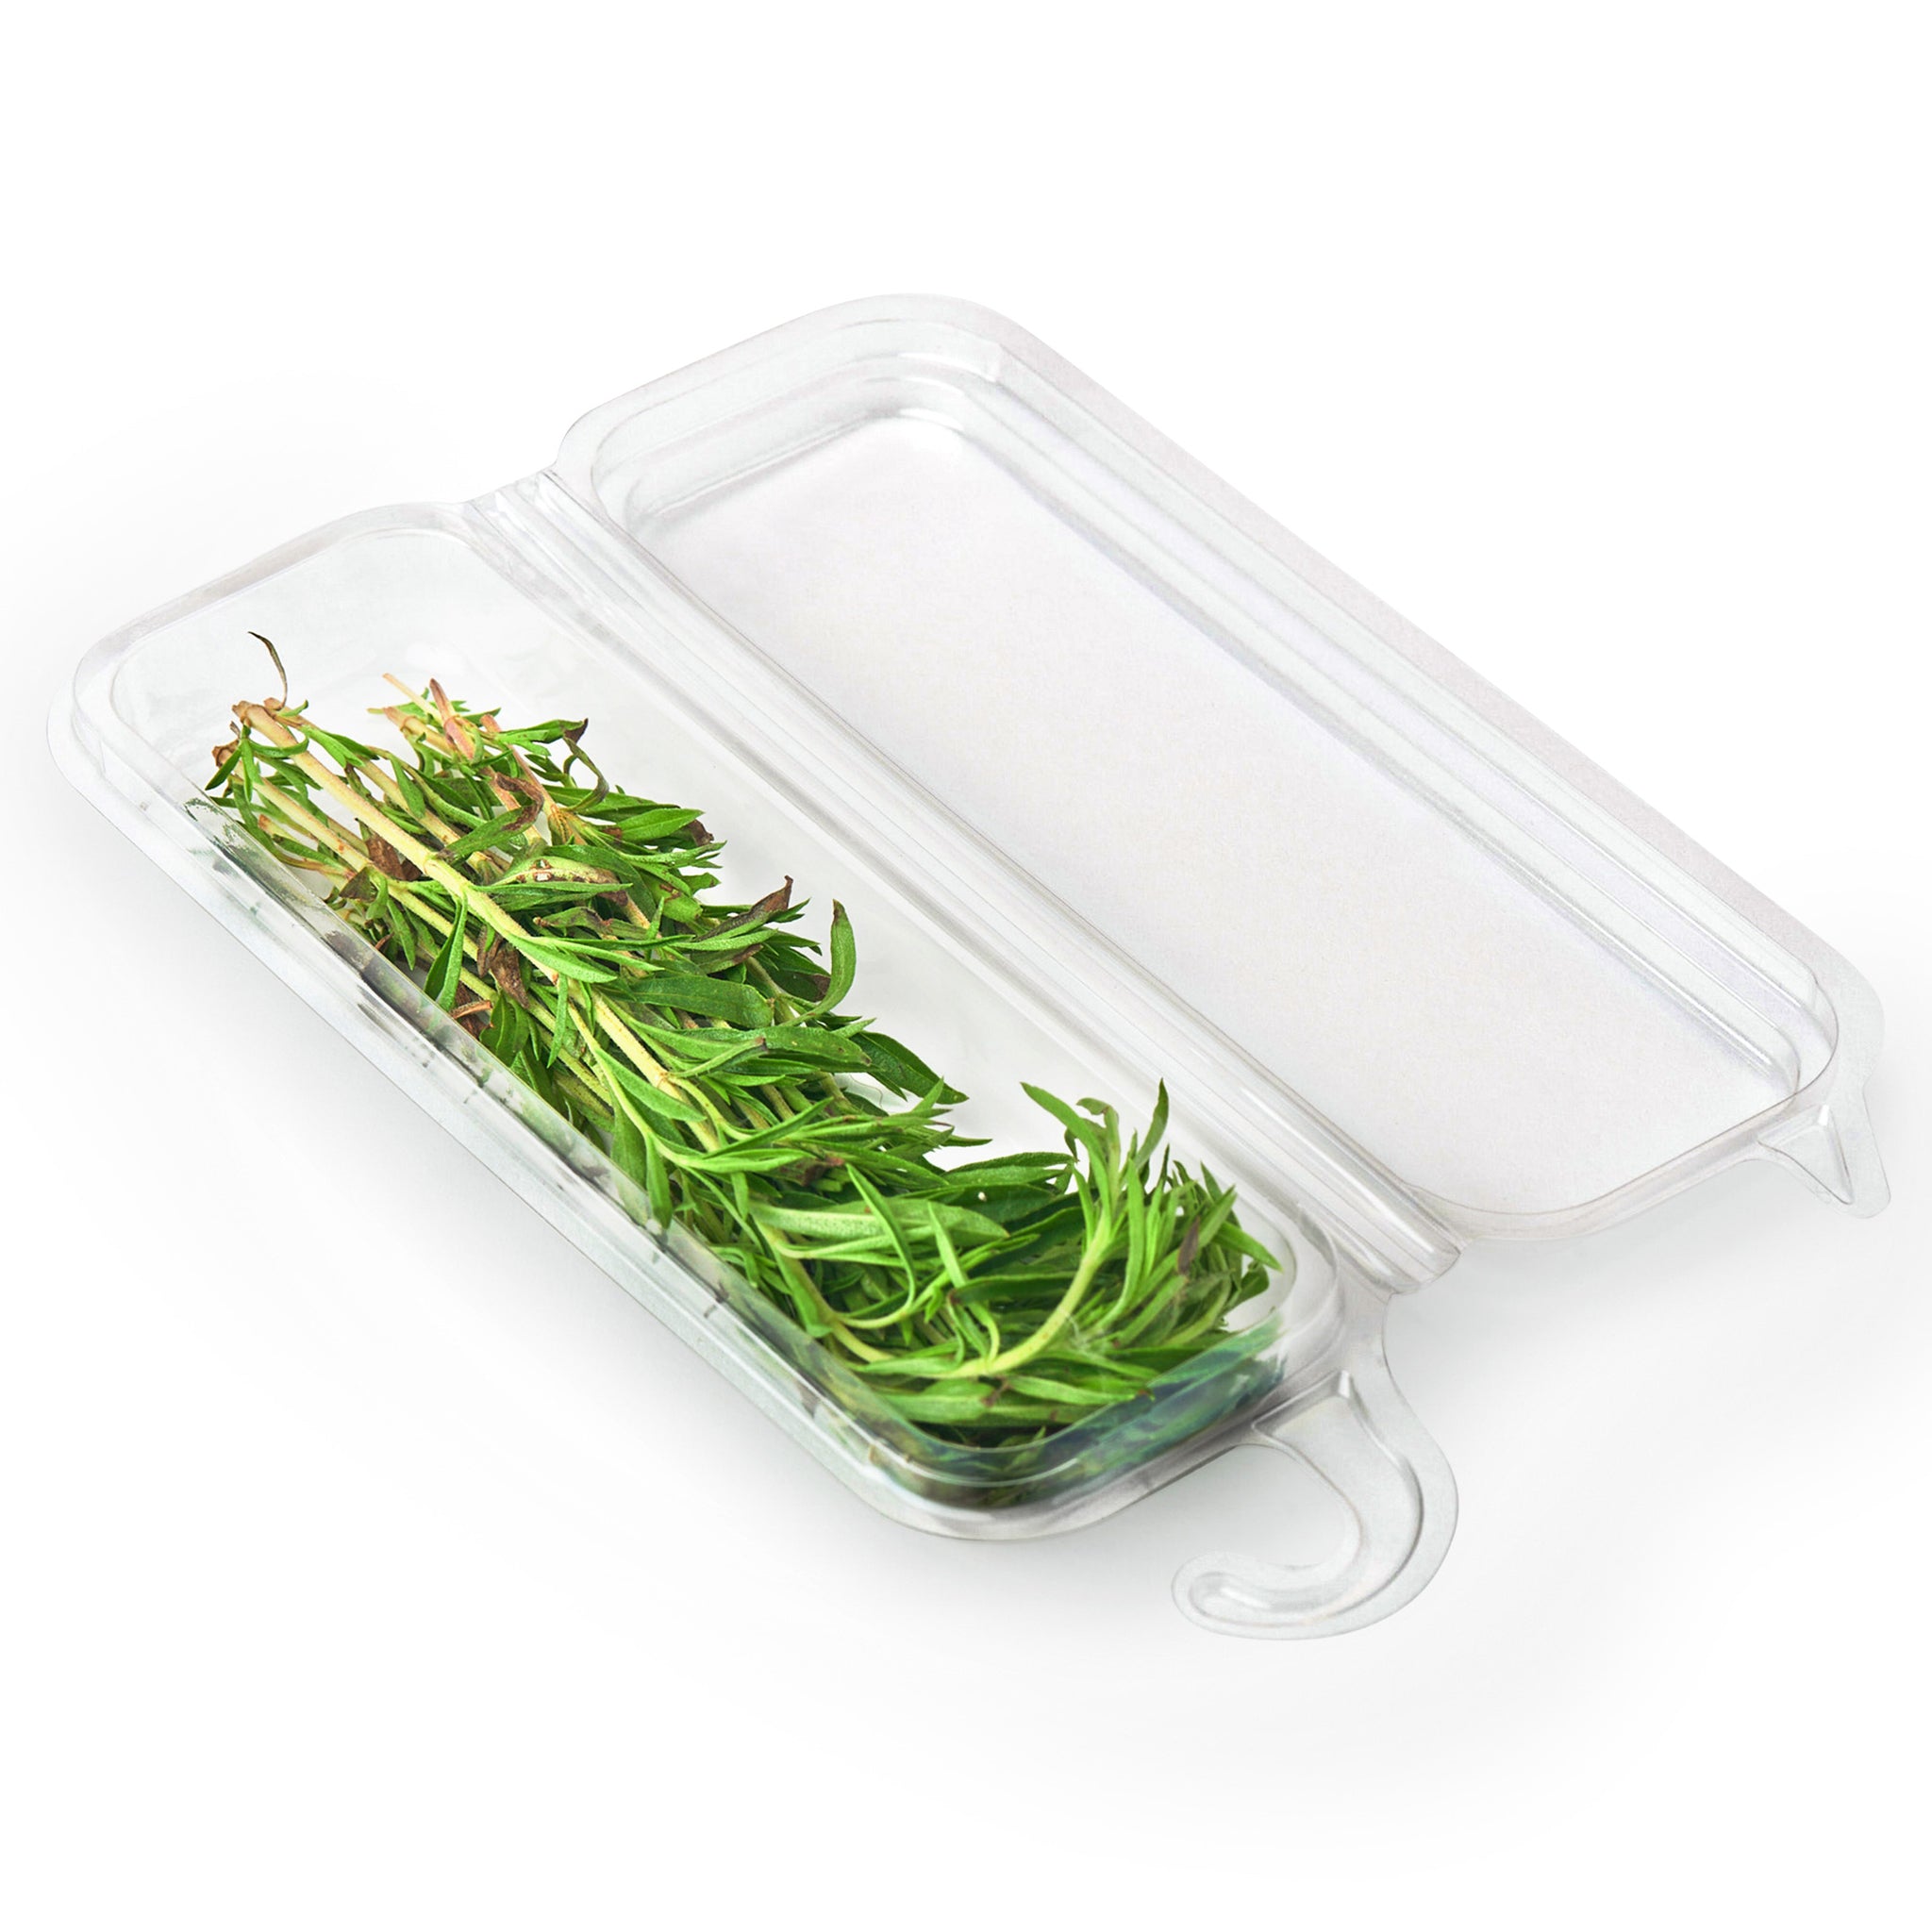 0.25 oz. Hanging Fresh Herb & Microgreen Package 0325